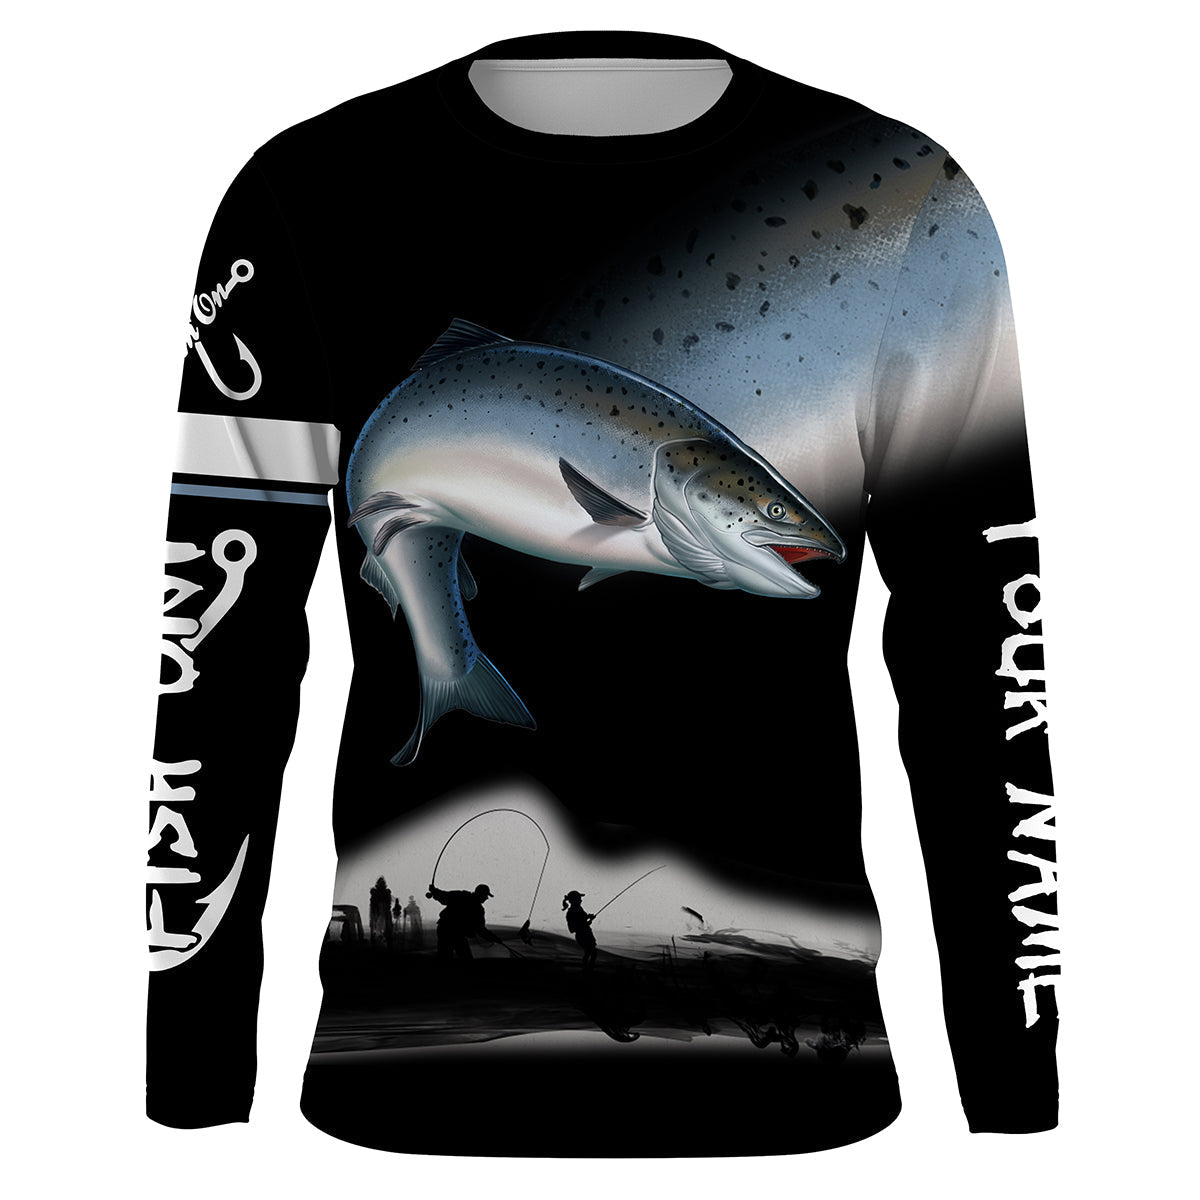 King Threadfin Salmon Fishing Shirt - Fishwreck